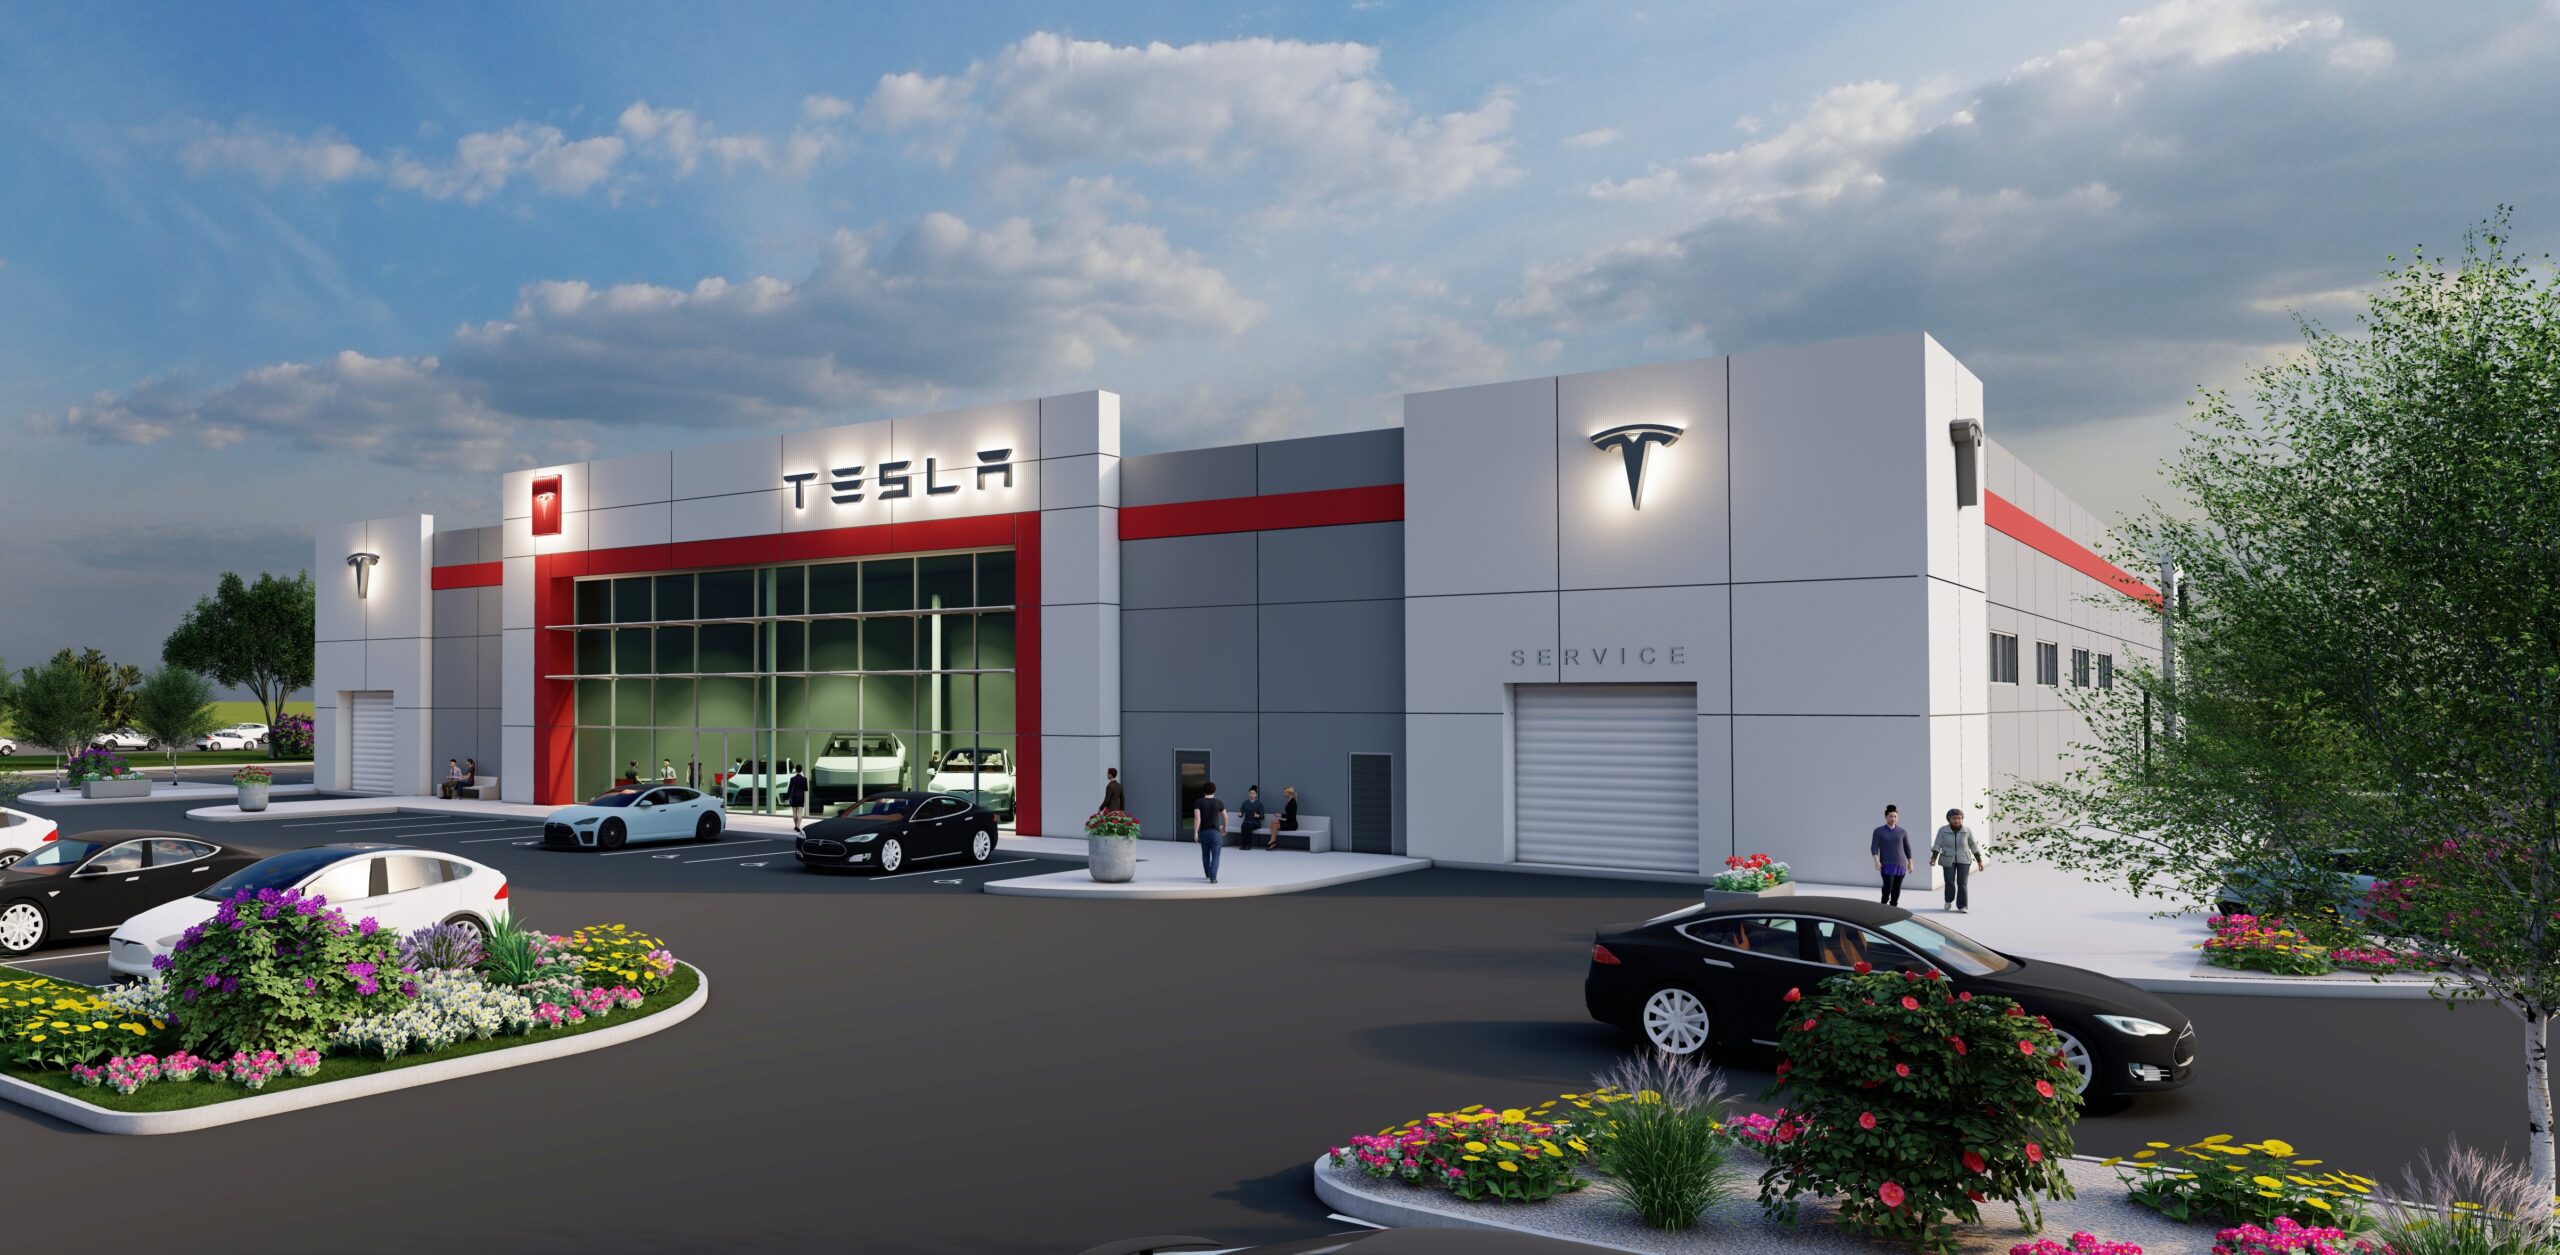 Featured image for “Tesla Showroom”